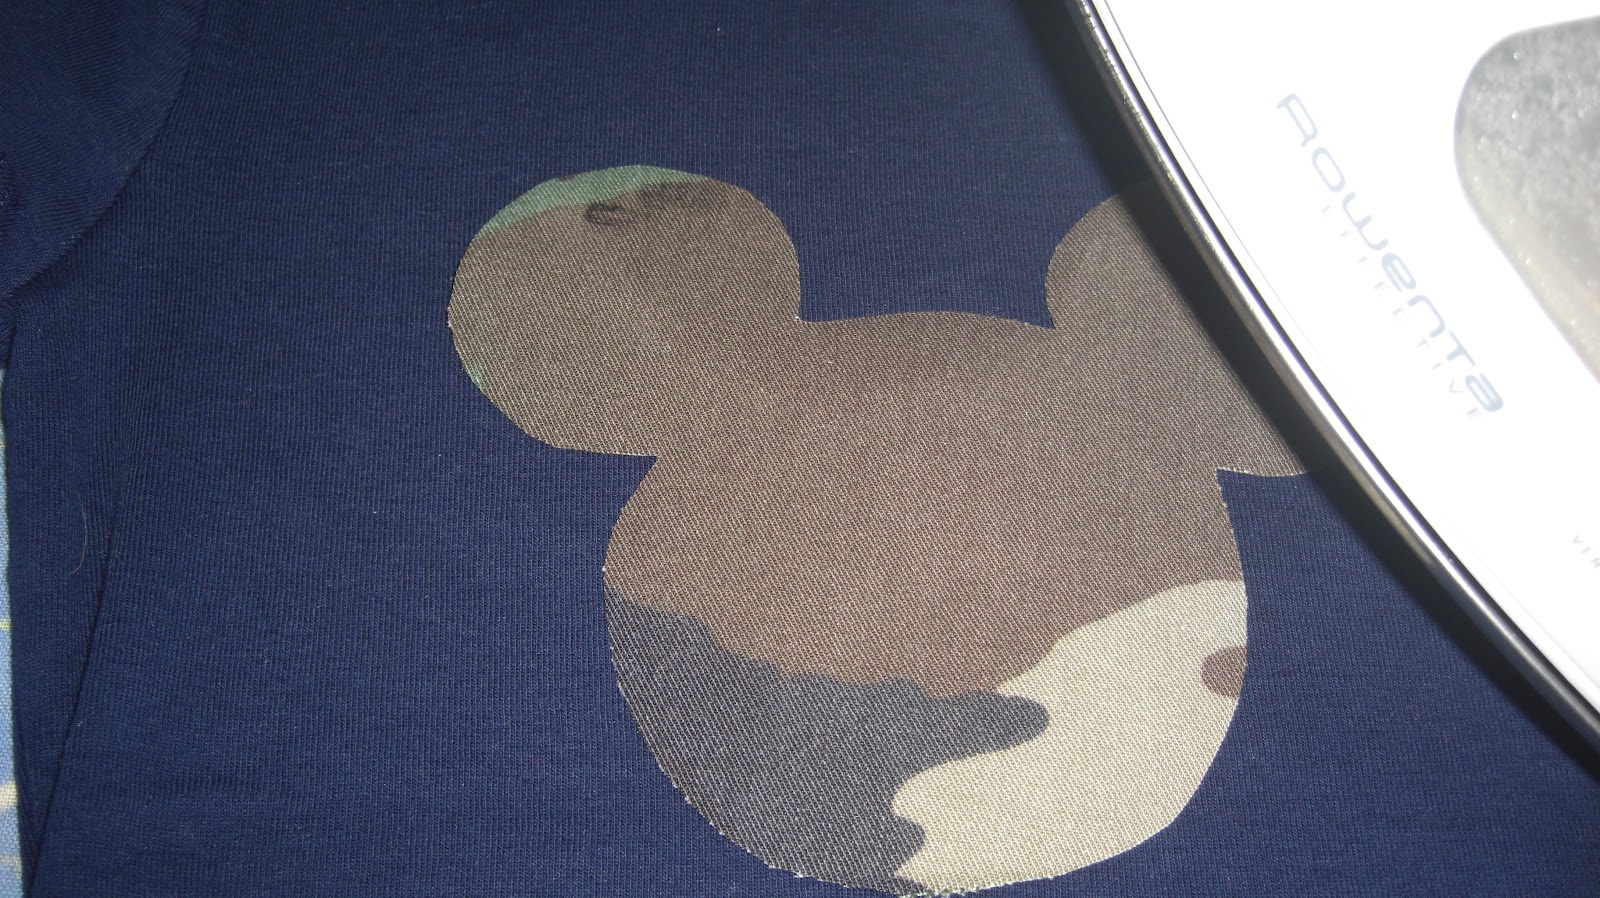 hurley's happy hangout: Disney Shirt #1~Camo Mickey